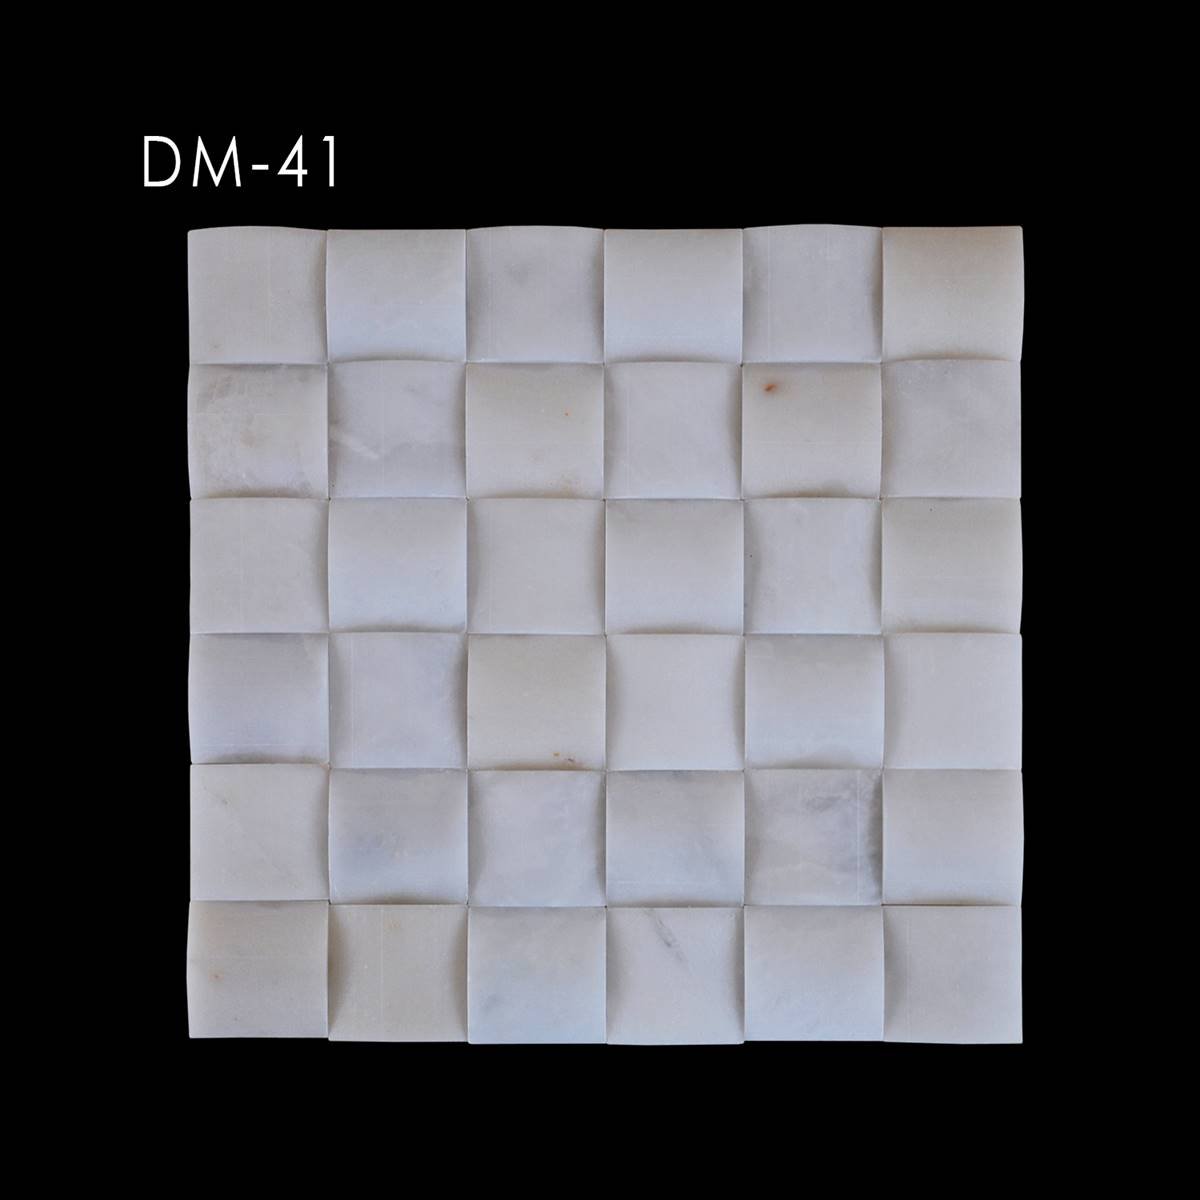 dm41 2 - efesusstone mermer